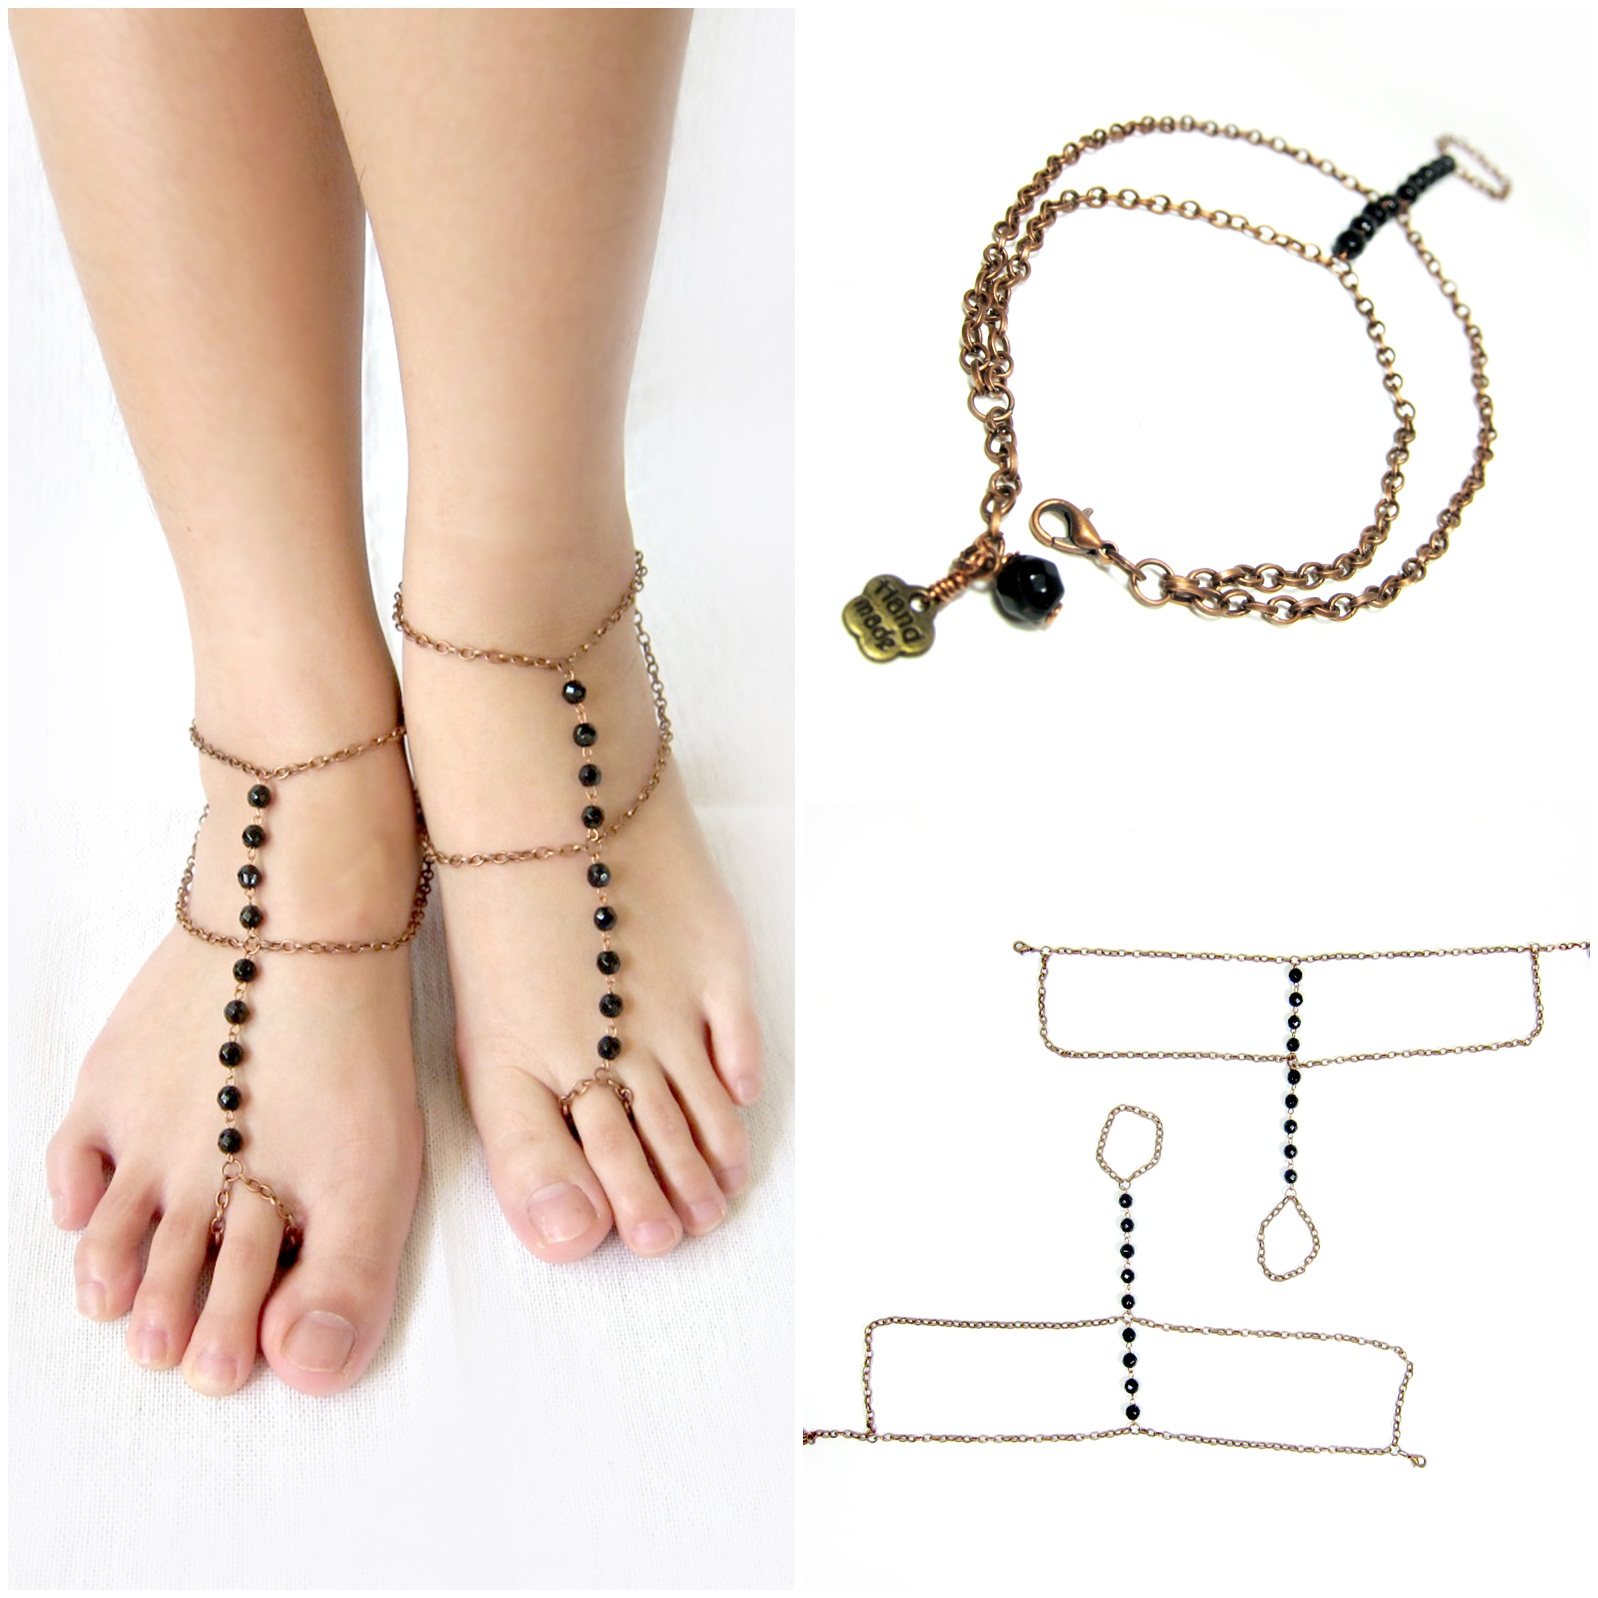 Ancient Tribe Handmade Adjustable Black Leather Anklet 